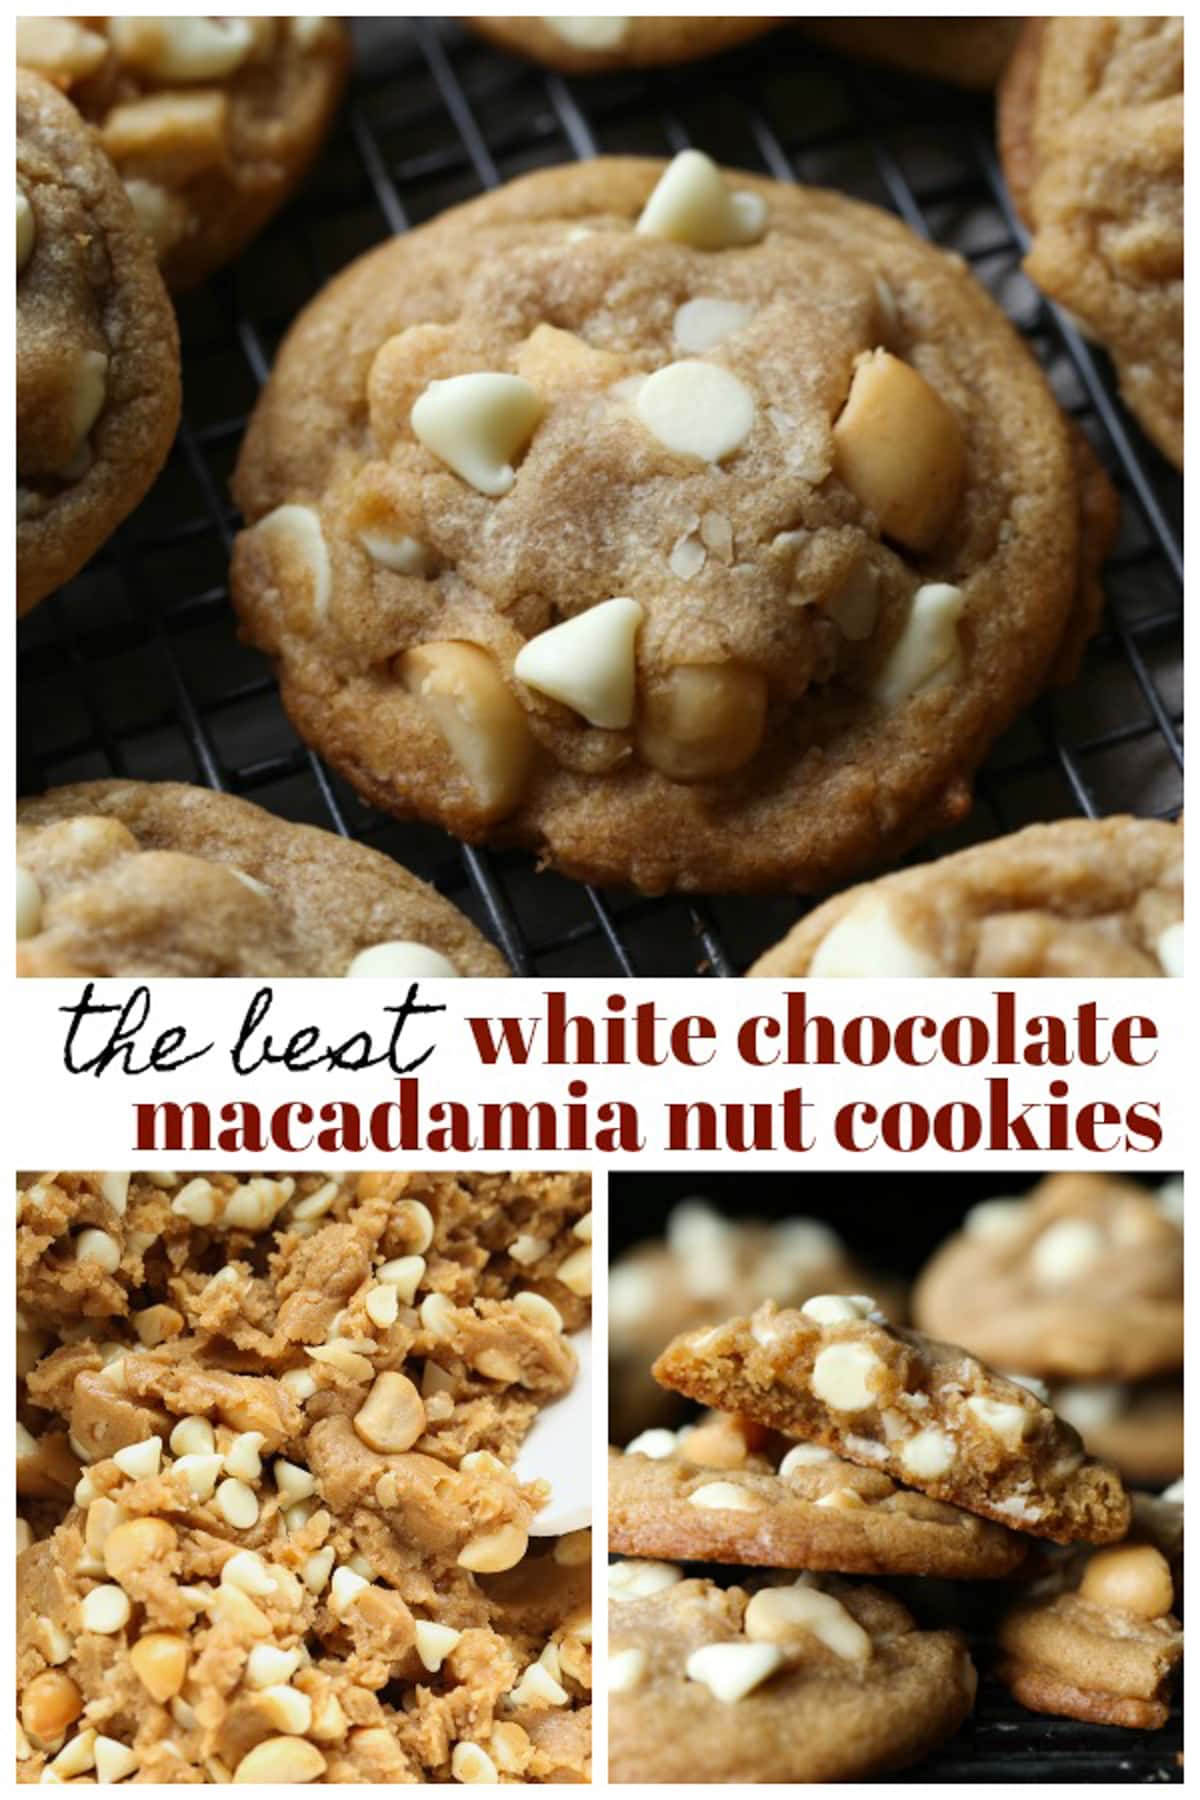 White Chocolate Macadamia Cookies Pinterest Image Collage